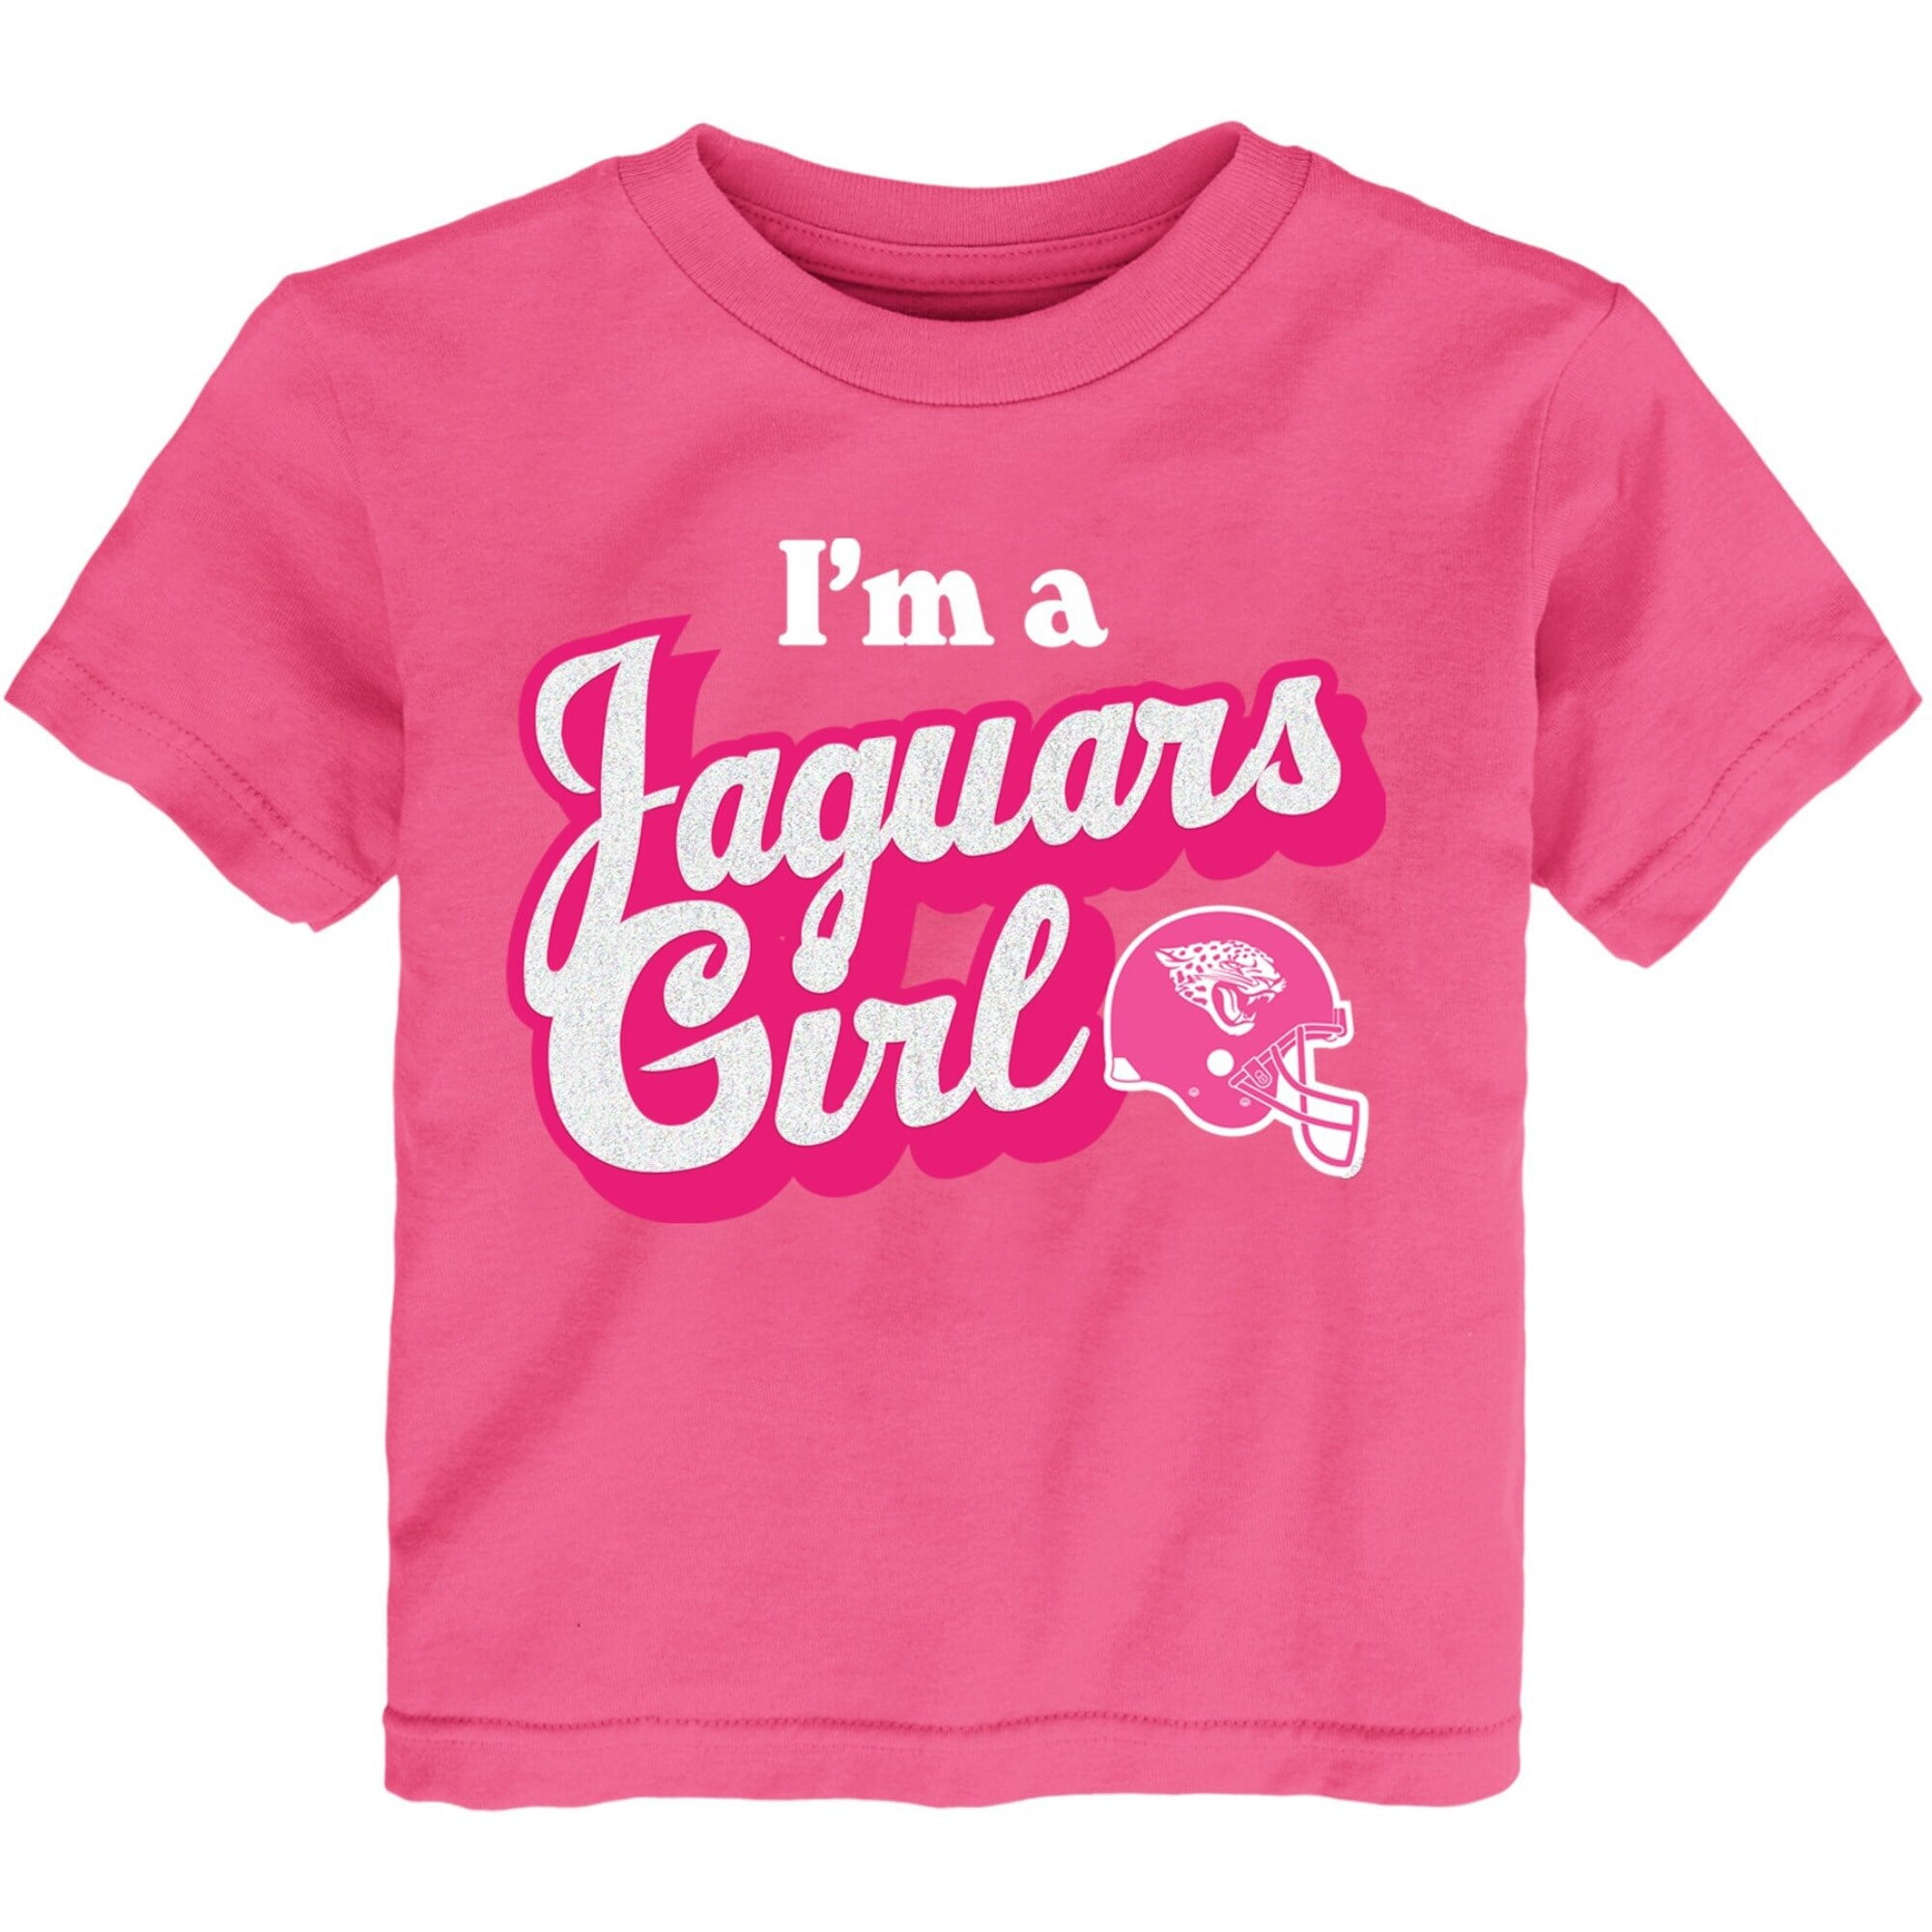 jacksonville jaguars toddler shirt